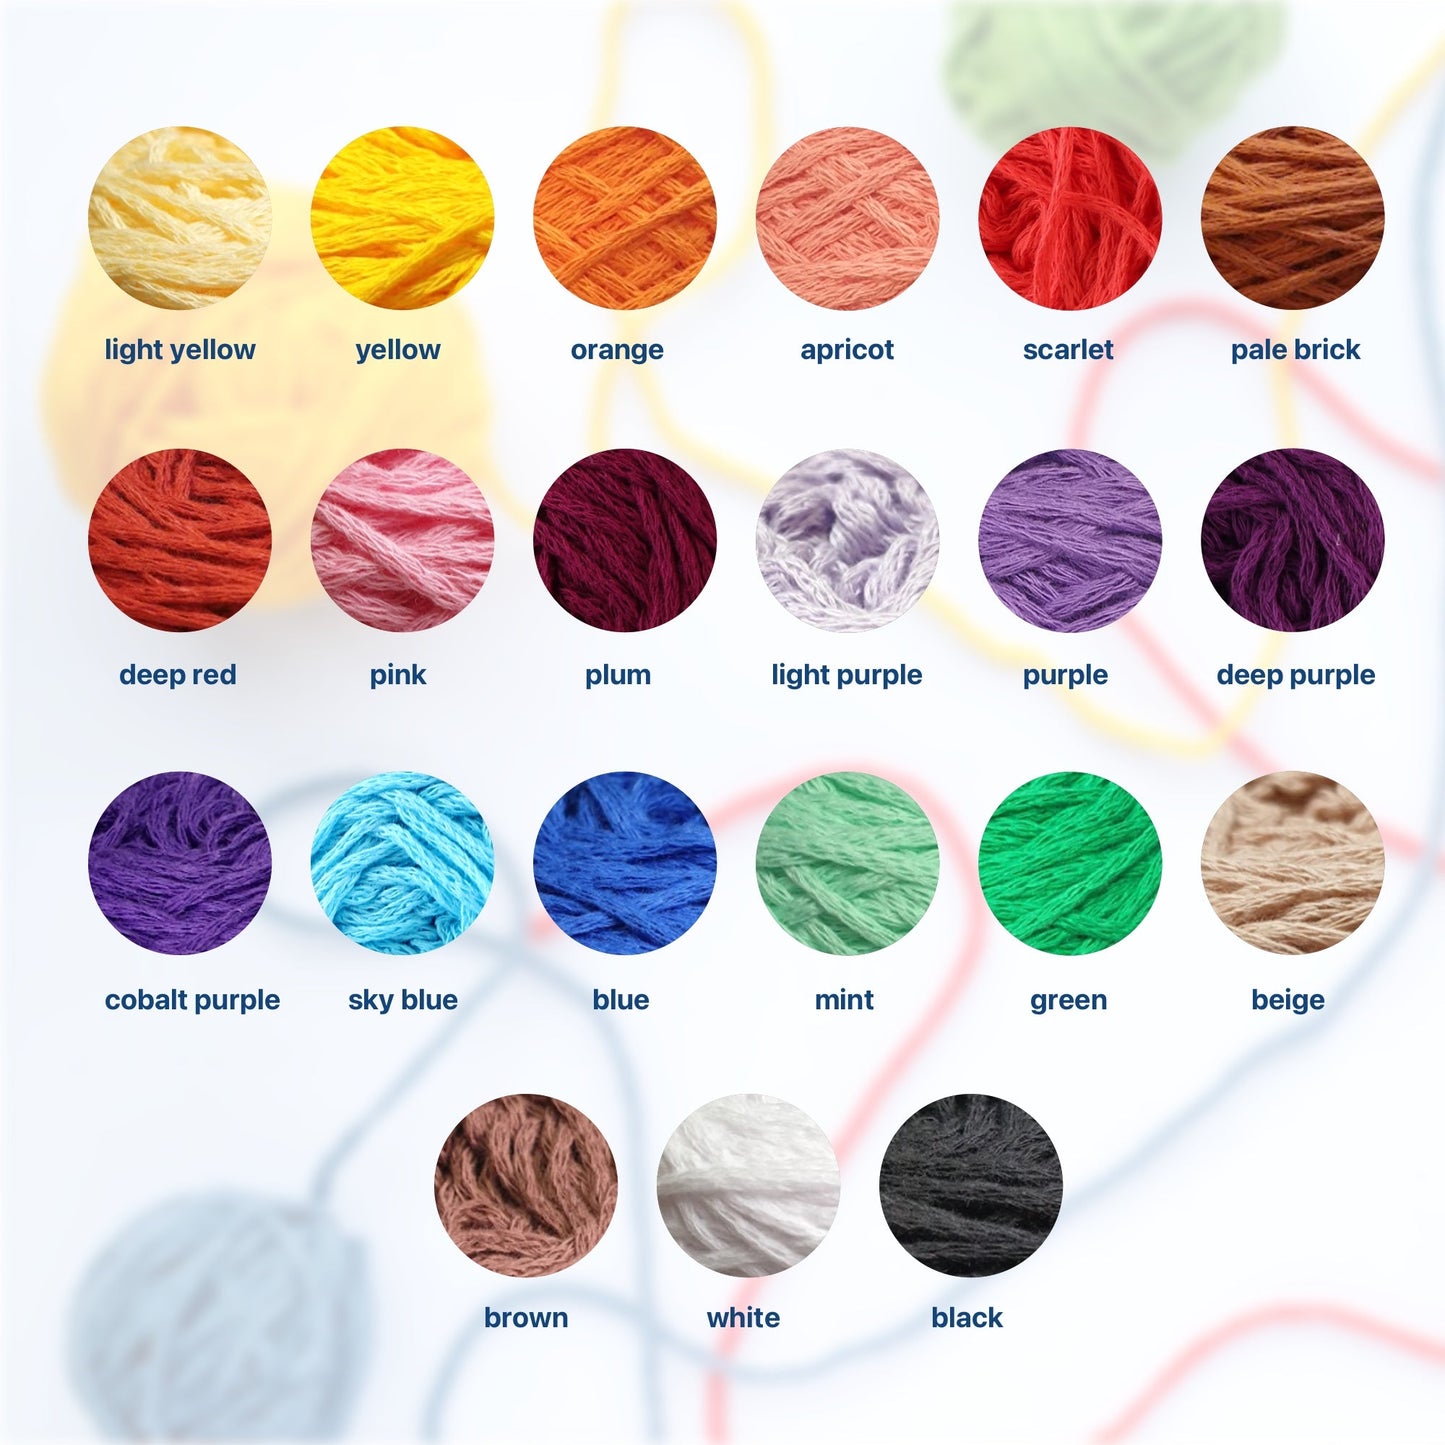 100% Cotton Tube Yarn, Cord Yarn 2mm, 21 Colors, Good for Bag & Goods - Orange